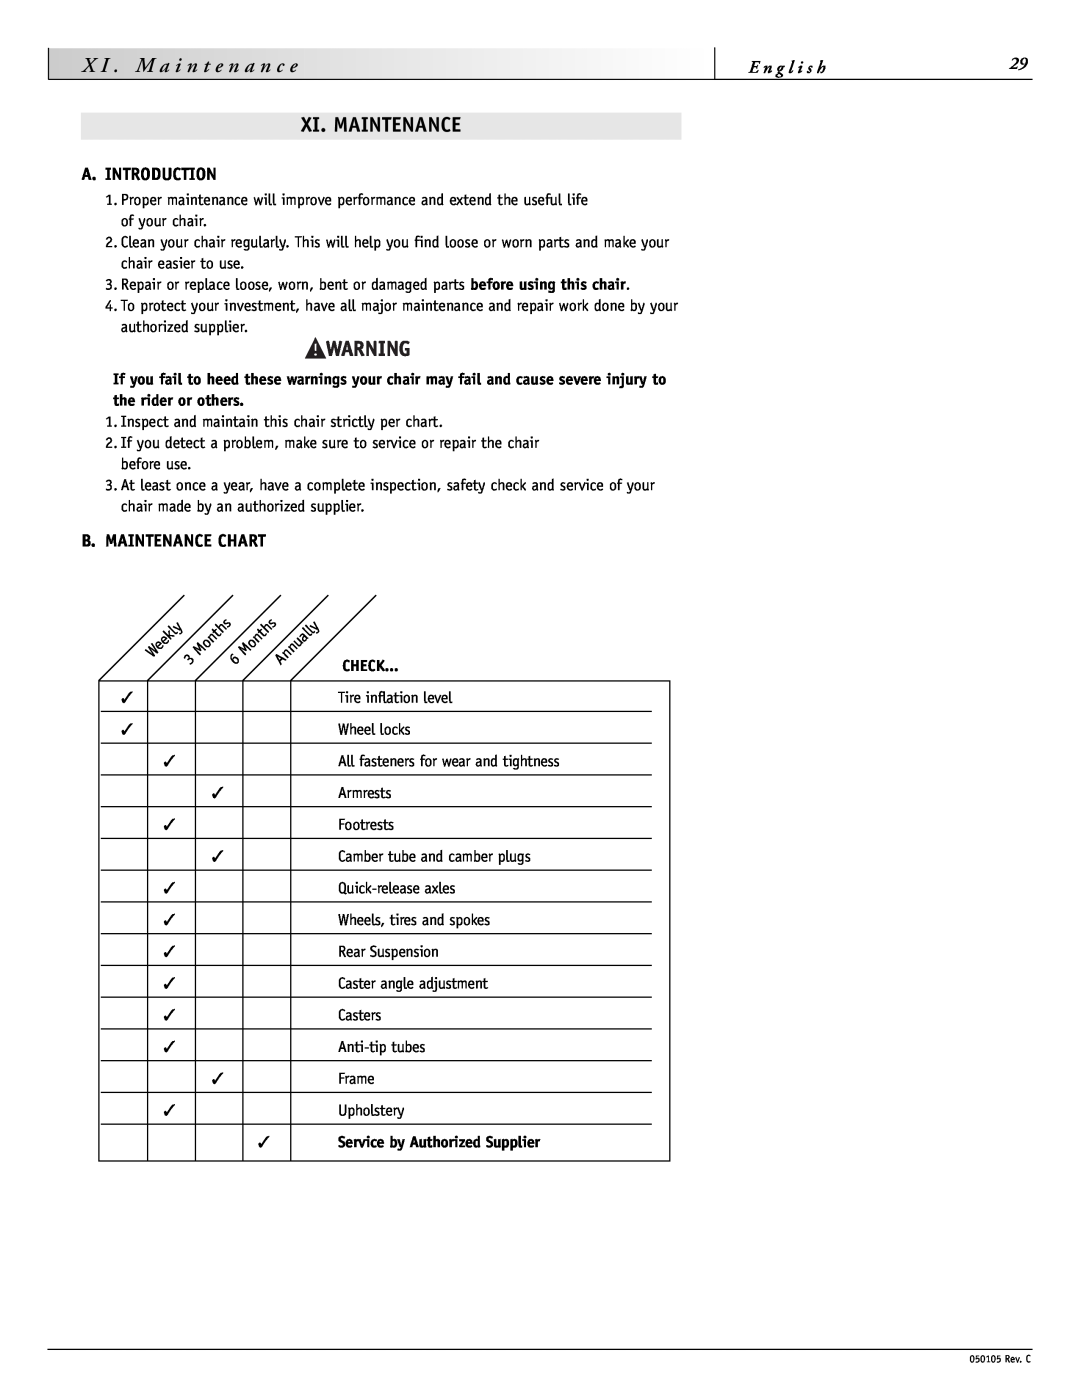 Sunrise Medical GT instruction manual Xi. Maintenance, A. Introduction, B. Maintenance Chart, n c e, E n g l i s h, Check 